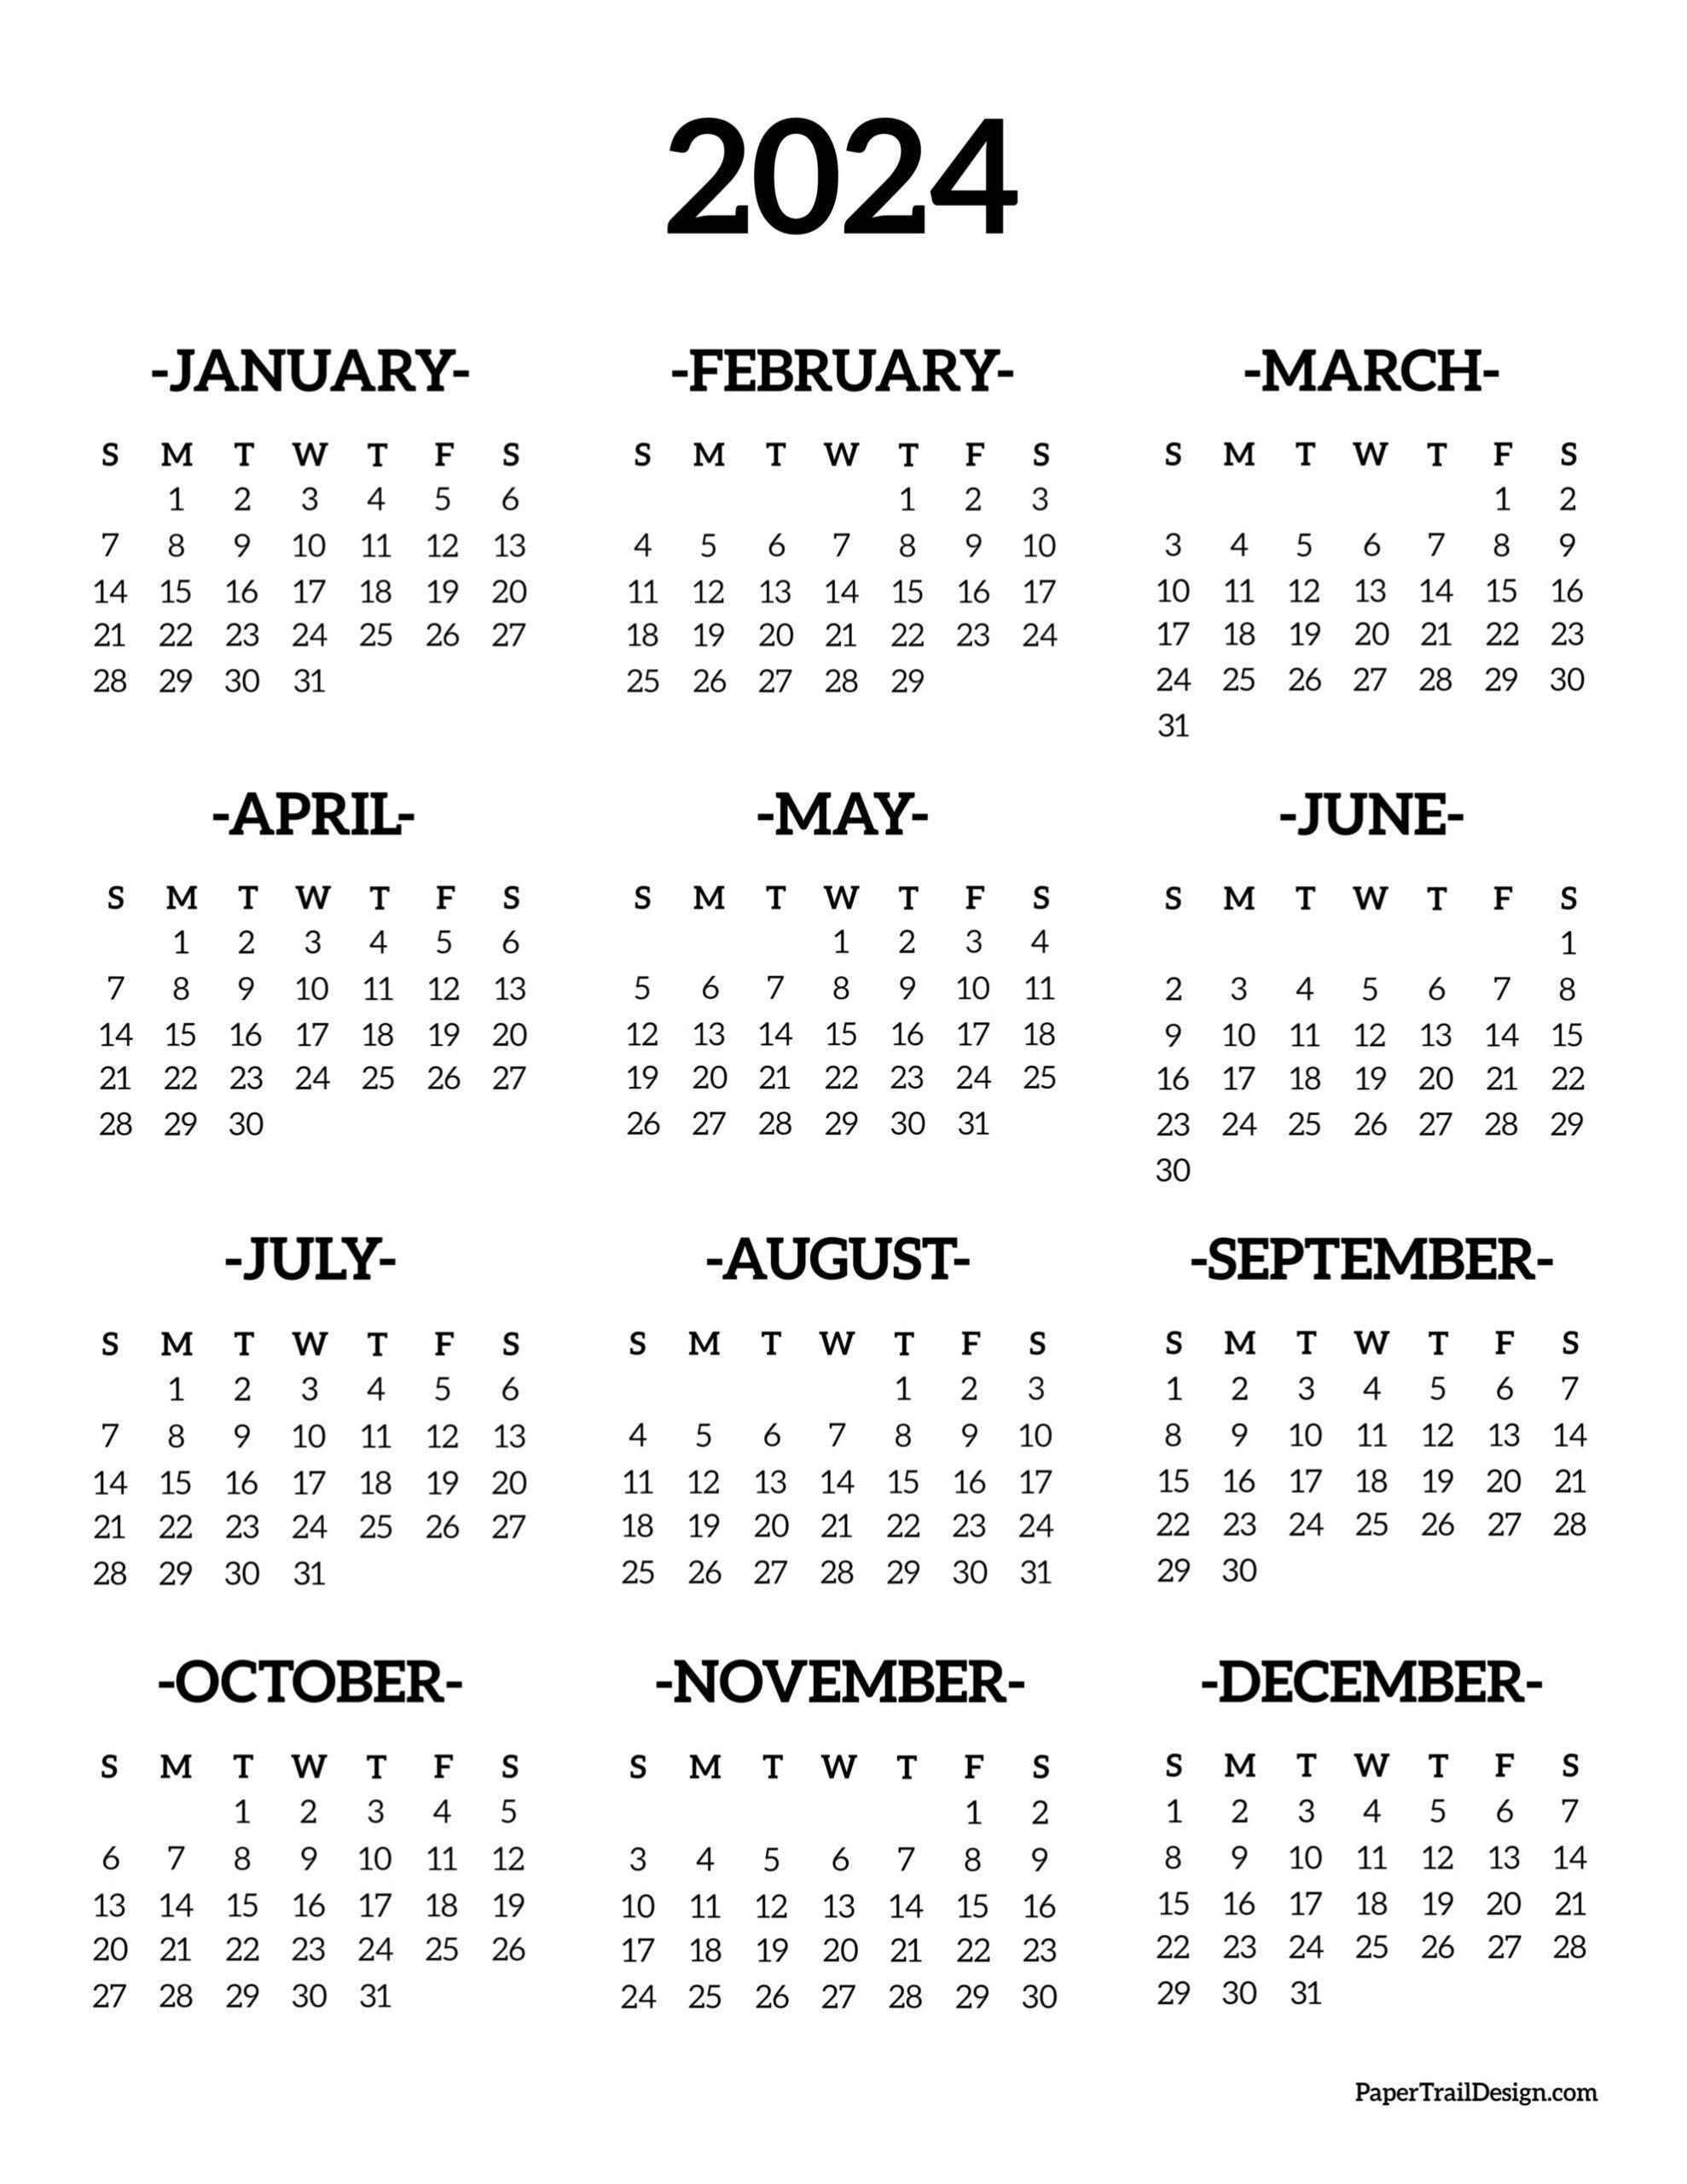 Calendar 2024 Printable One Page - Paper Trail Design | Printable Calendar 2024 Free